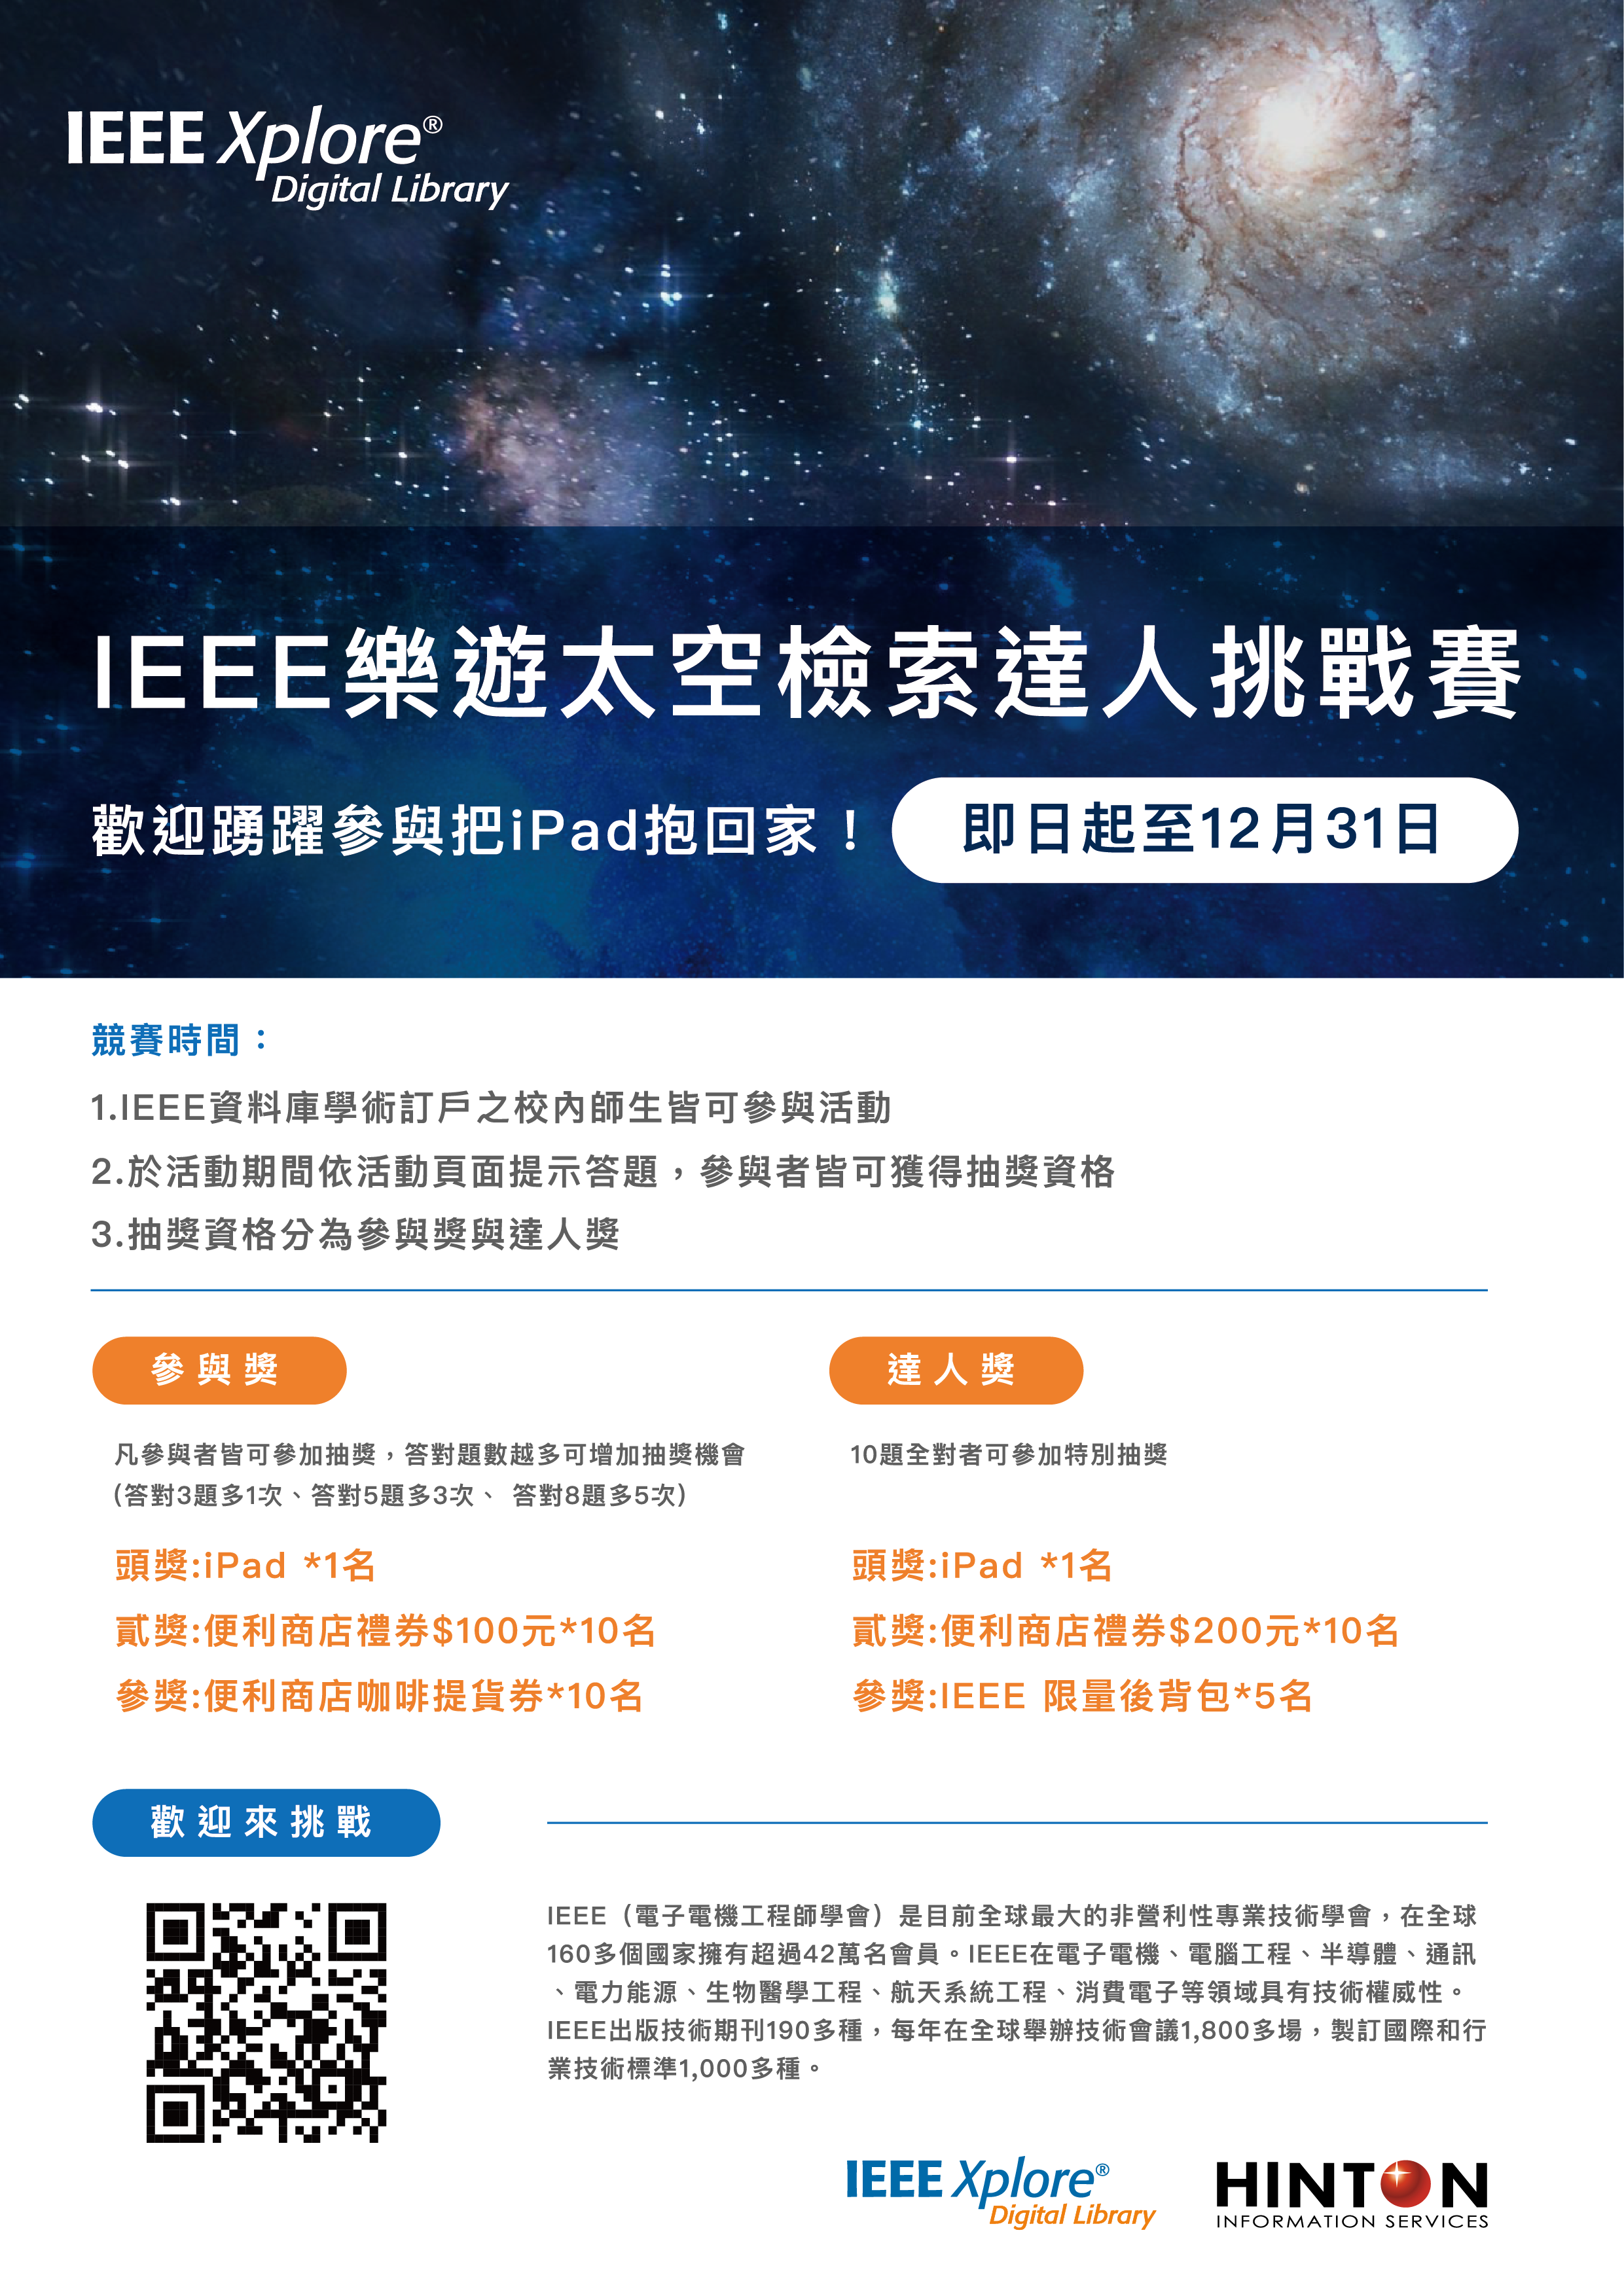 IEEE Xplore Quiz Contest